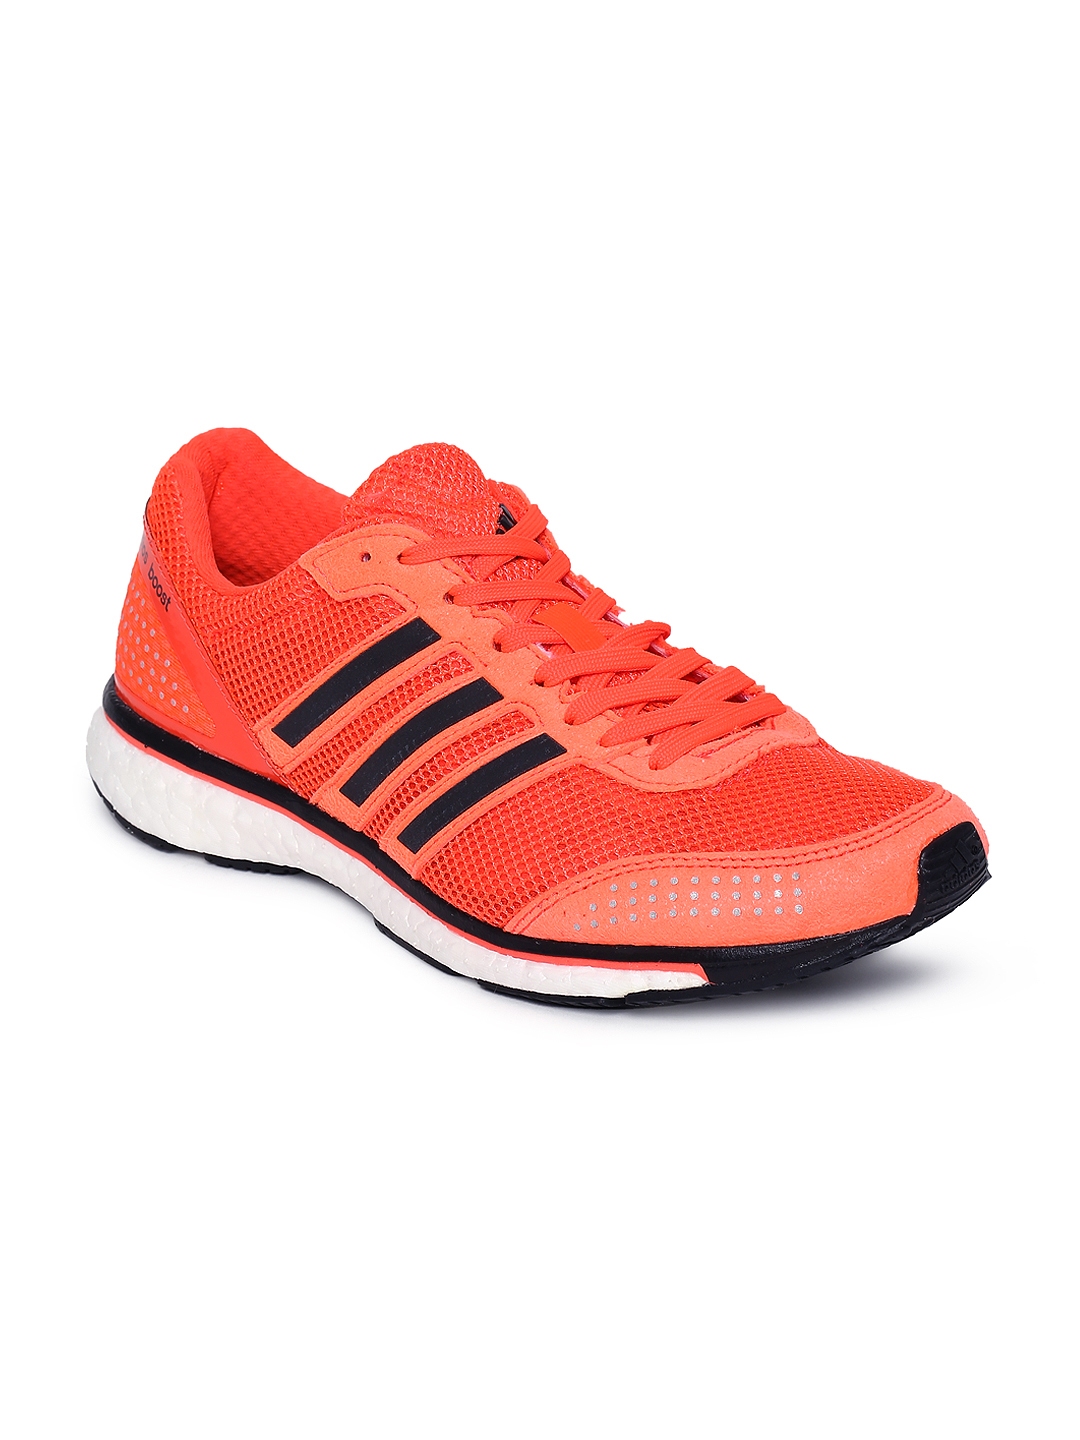 ADIDAS Men Neon Orange Adizero Boost 2 M Running Shoes - Sports Shoes for Men 406481 | Myntra